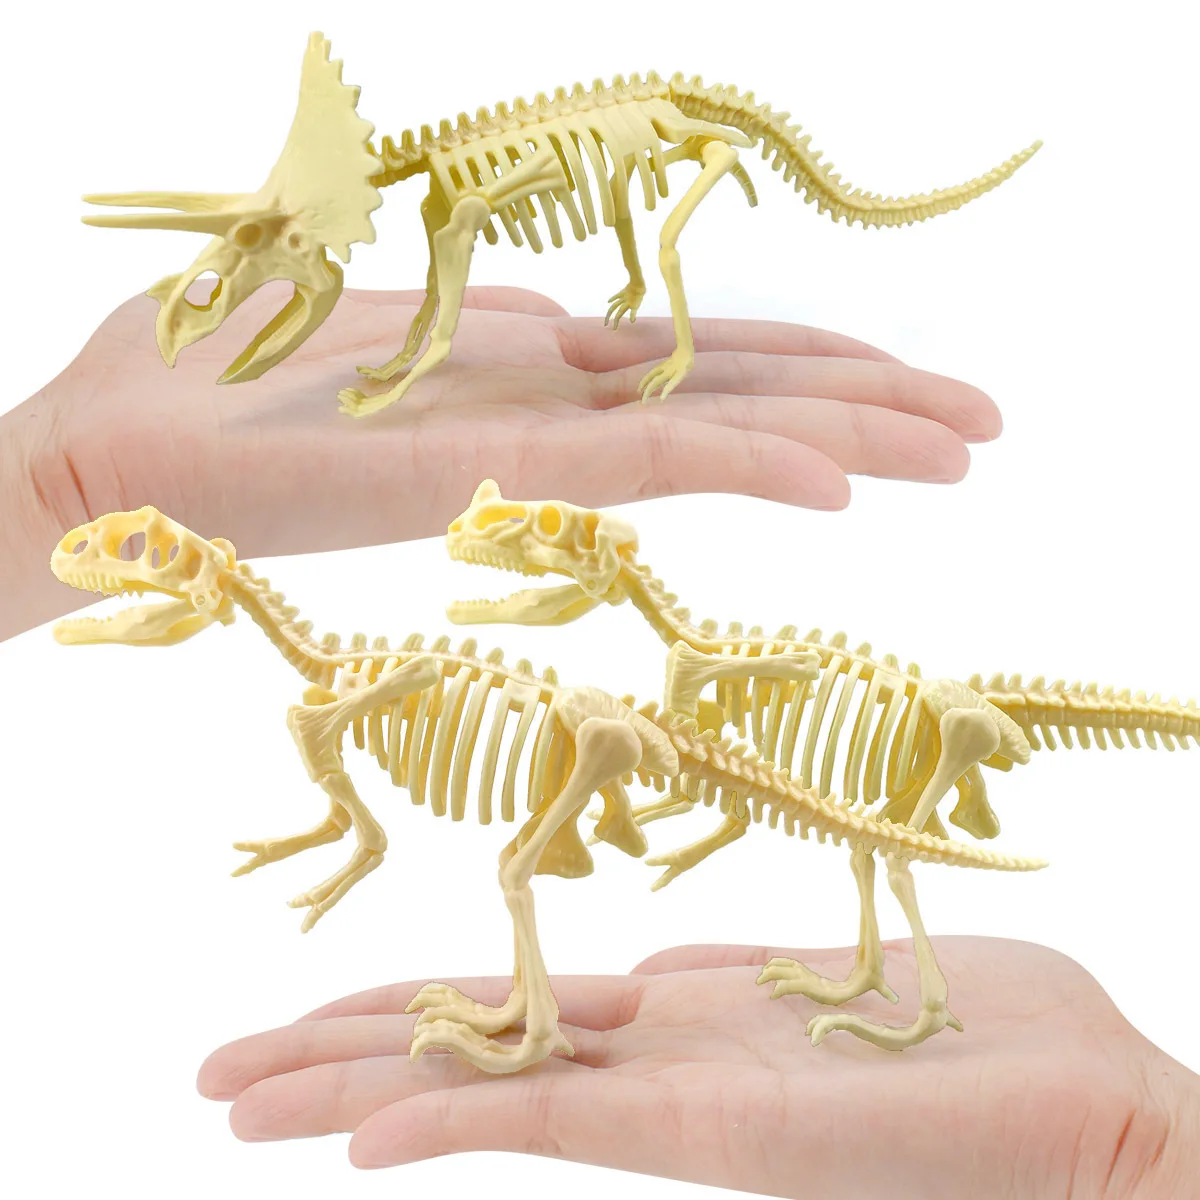 

7-piece DIY Assembly Archaeological Dinosaur Skeleton Dinosaur Set Simulation Dinosaur Fossil Model Children's Toy Gift